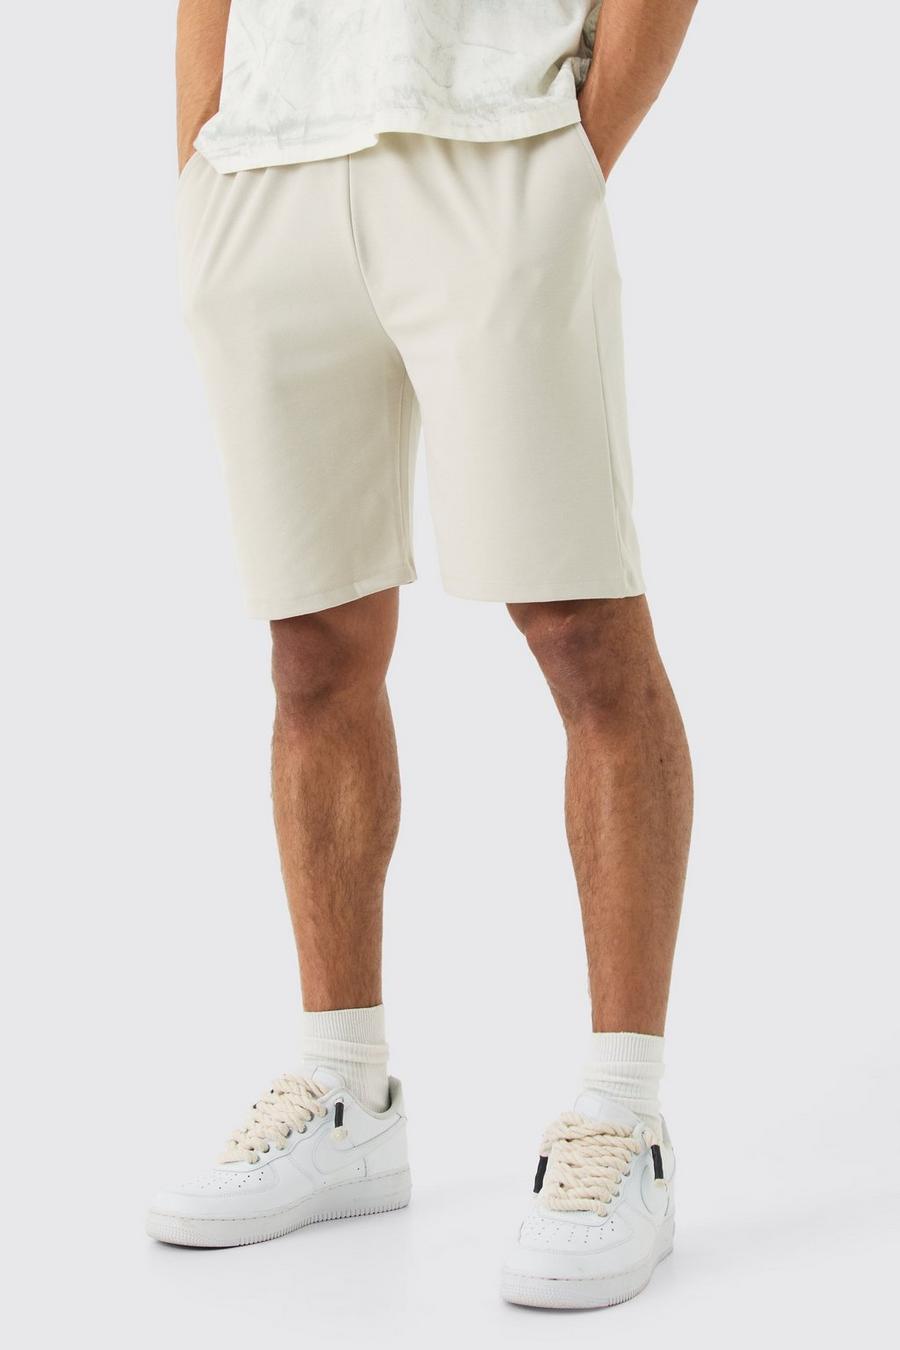 Lockere mittellange Premium Shorts, Sand